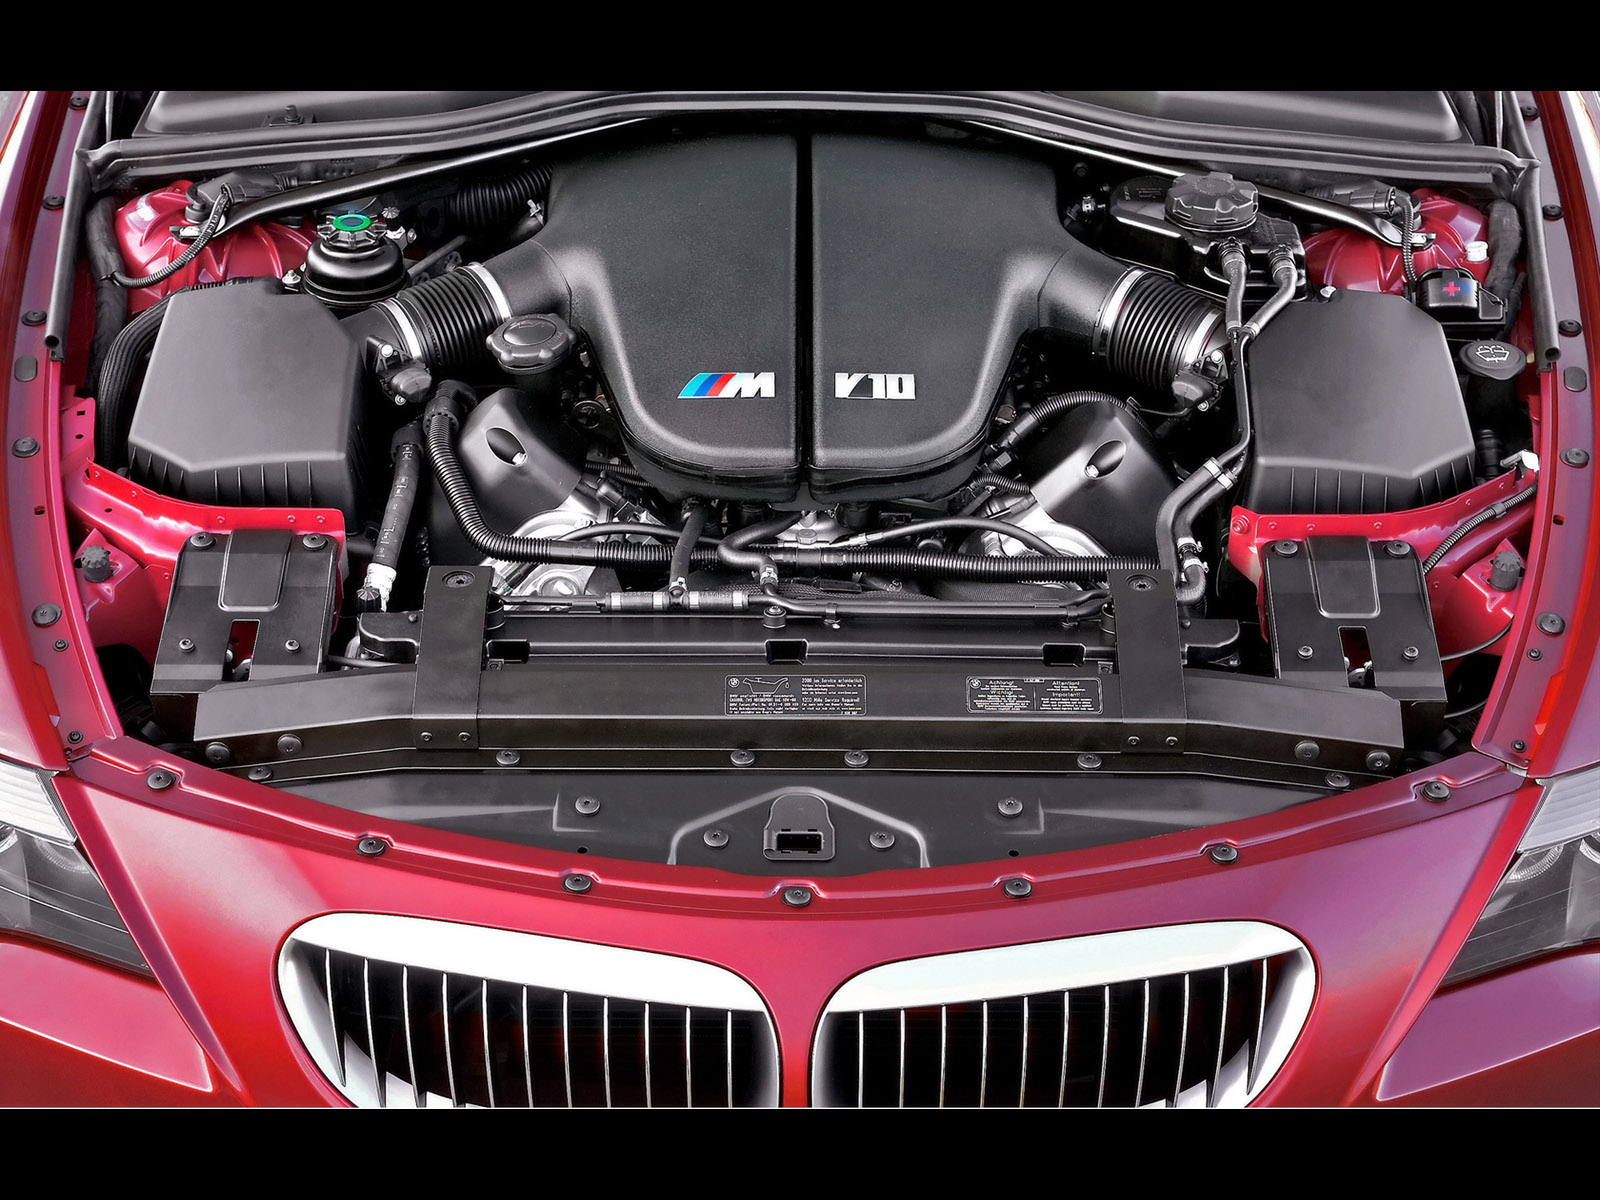 BMW M6 engine